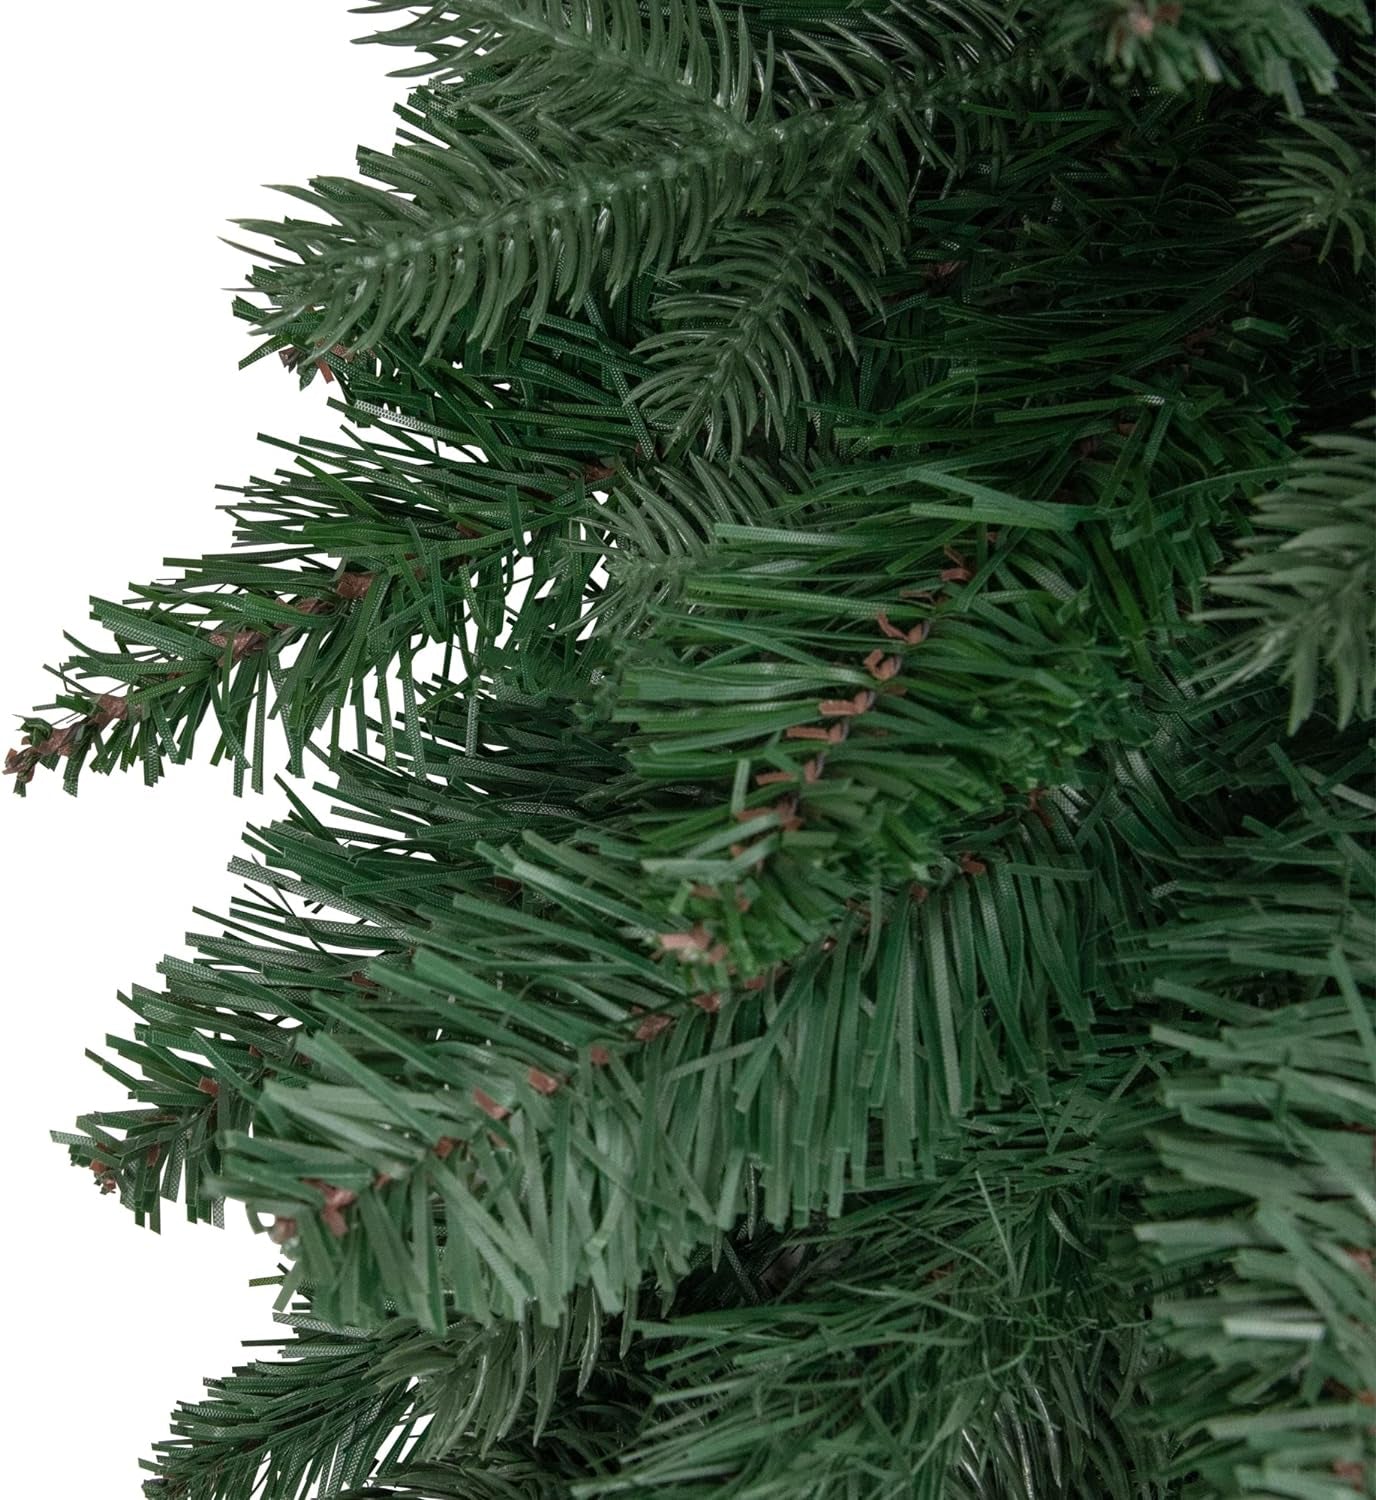 32" Mixed Pine Artificial Christmas Teardrop Swag - Unlit